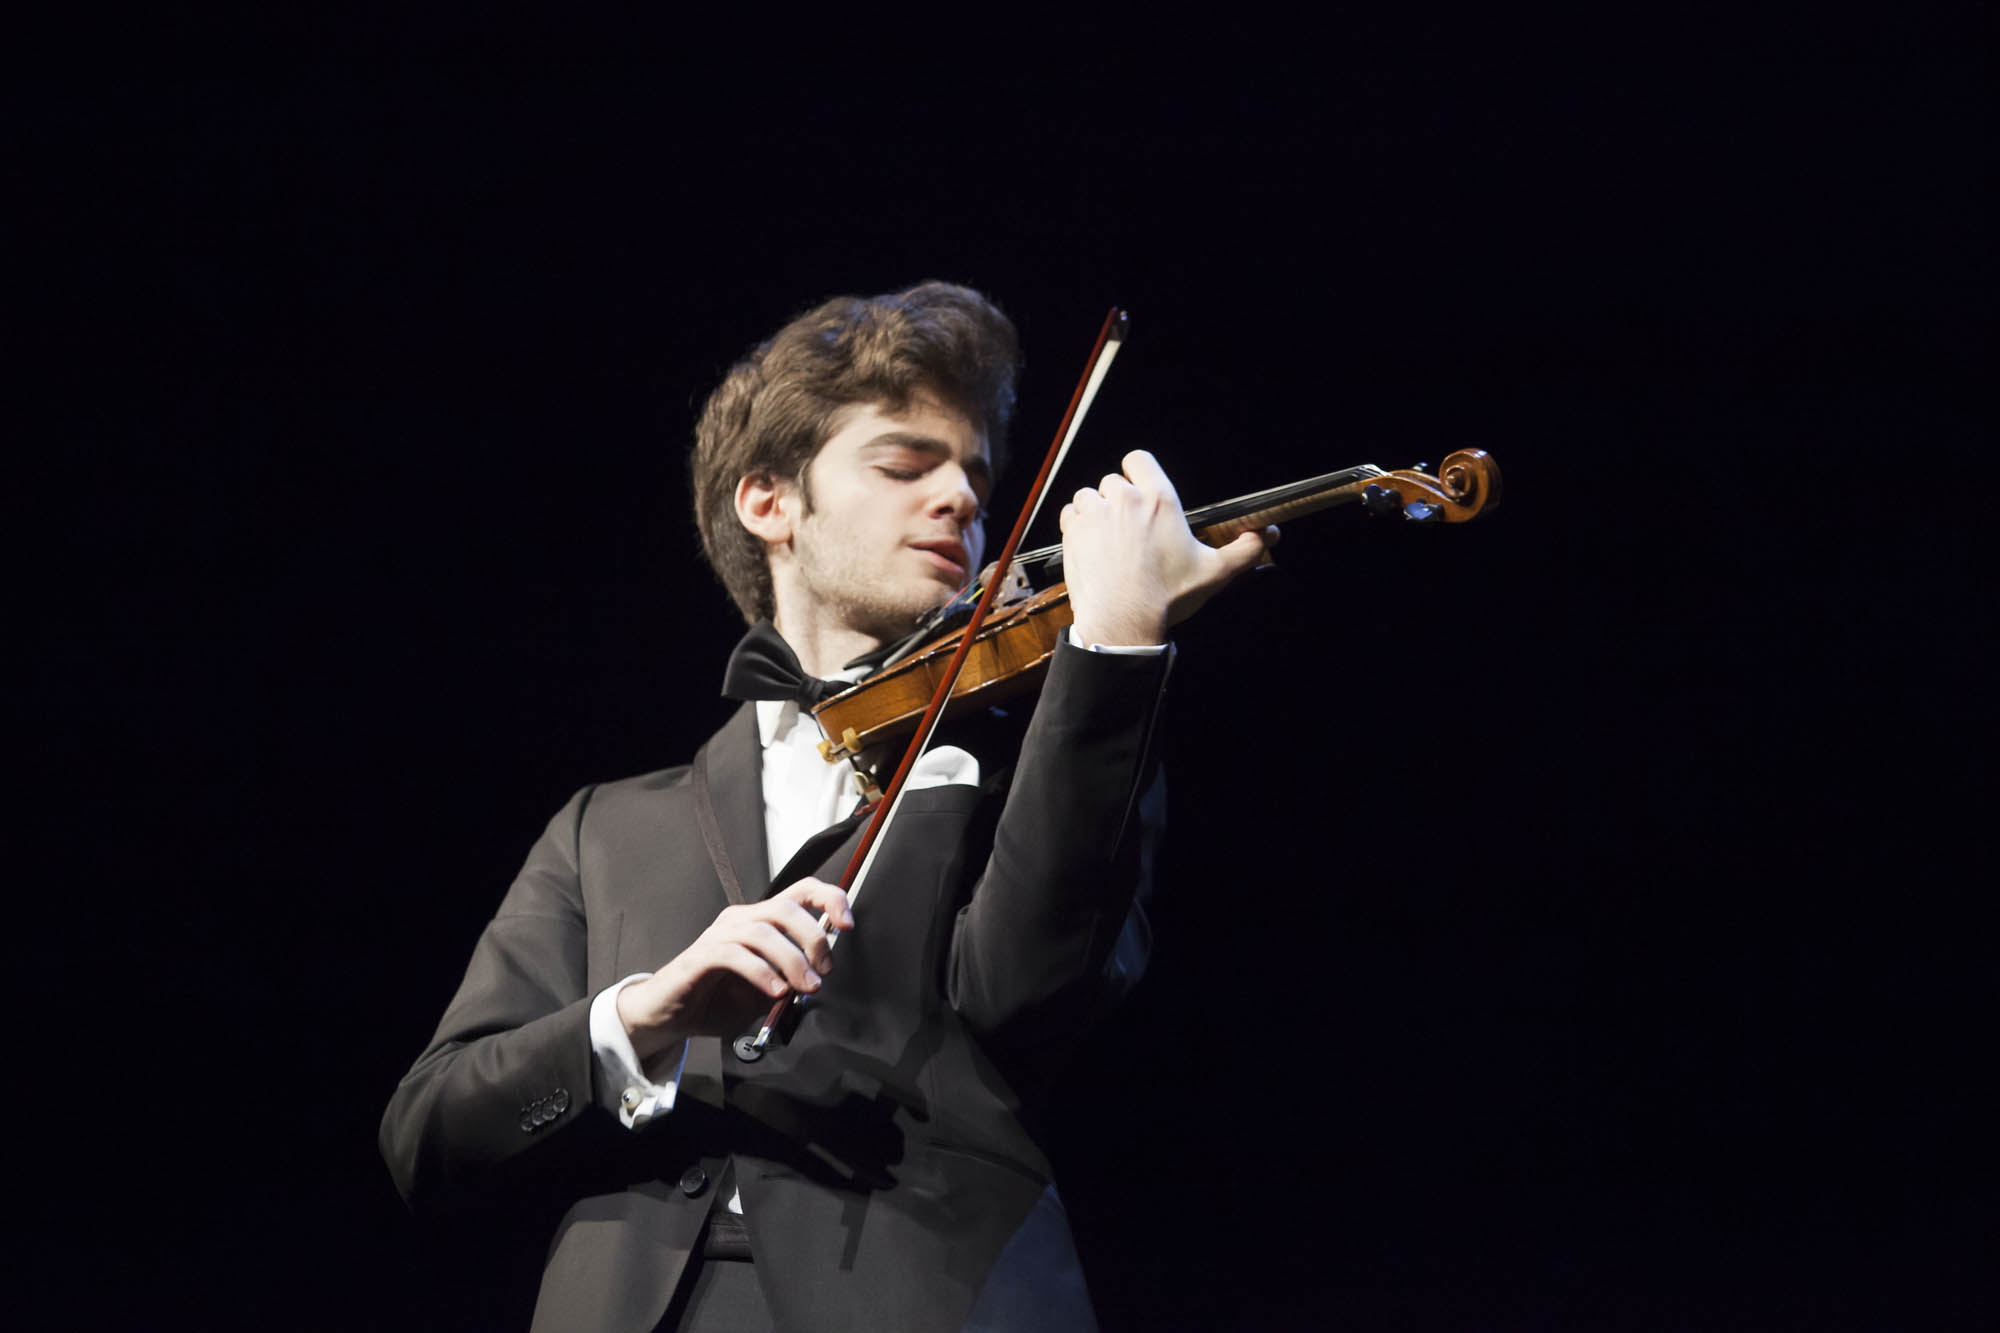 Austrian violinist Emmanuel Tjeknavorian will headline this year’s Hanko Music Festival